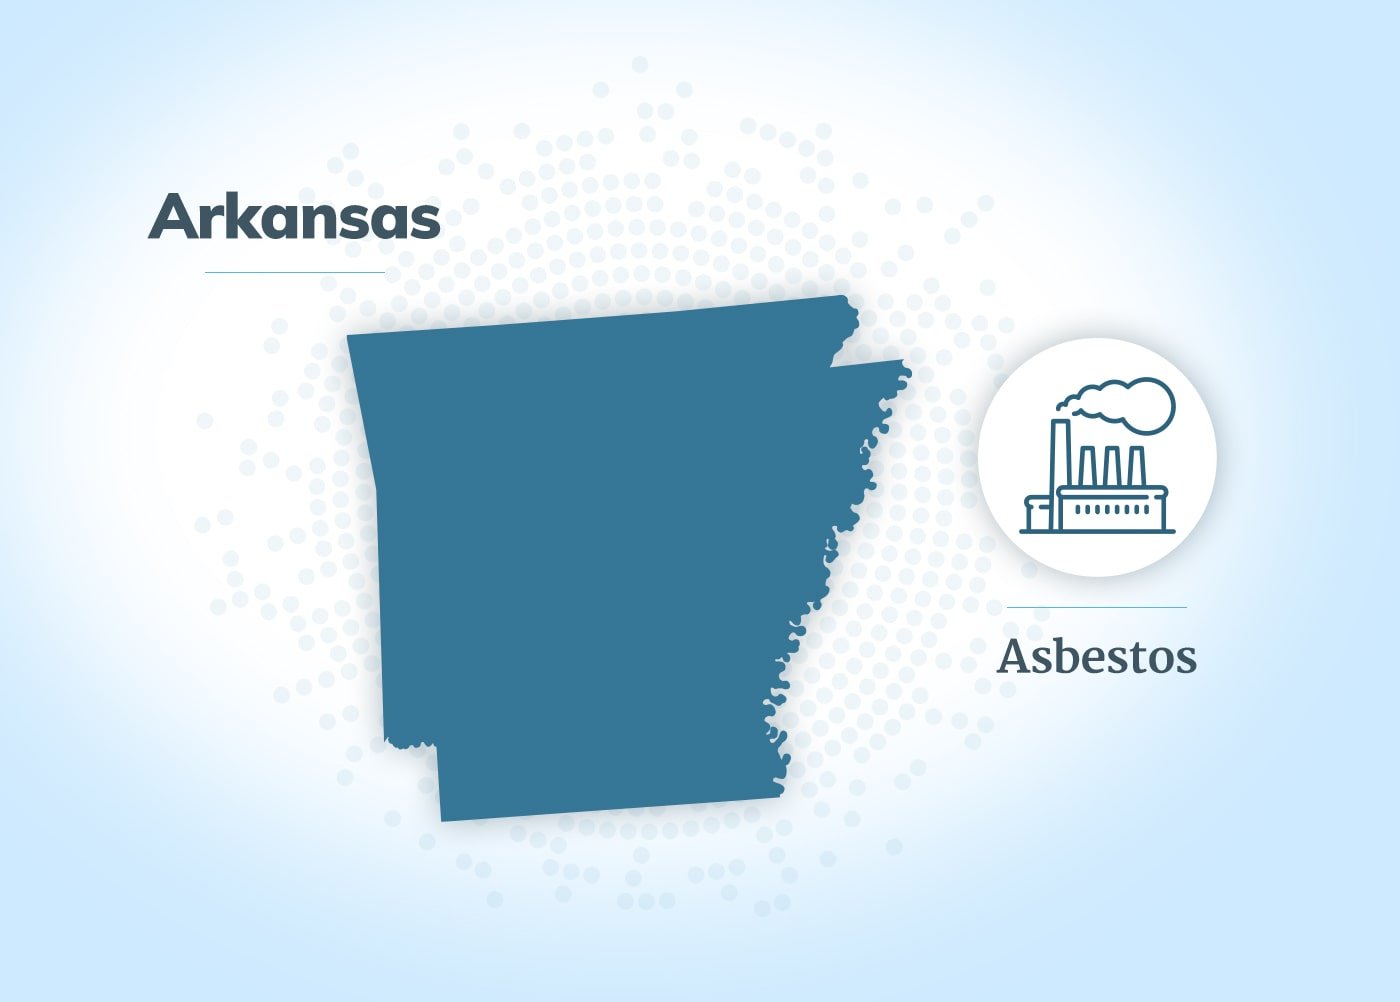 Asbestos exposure in Arkansas